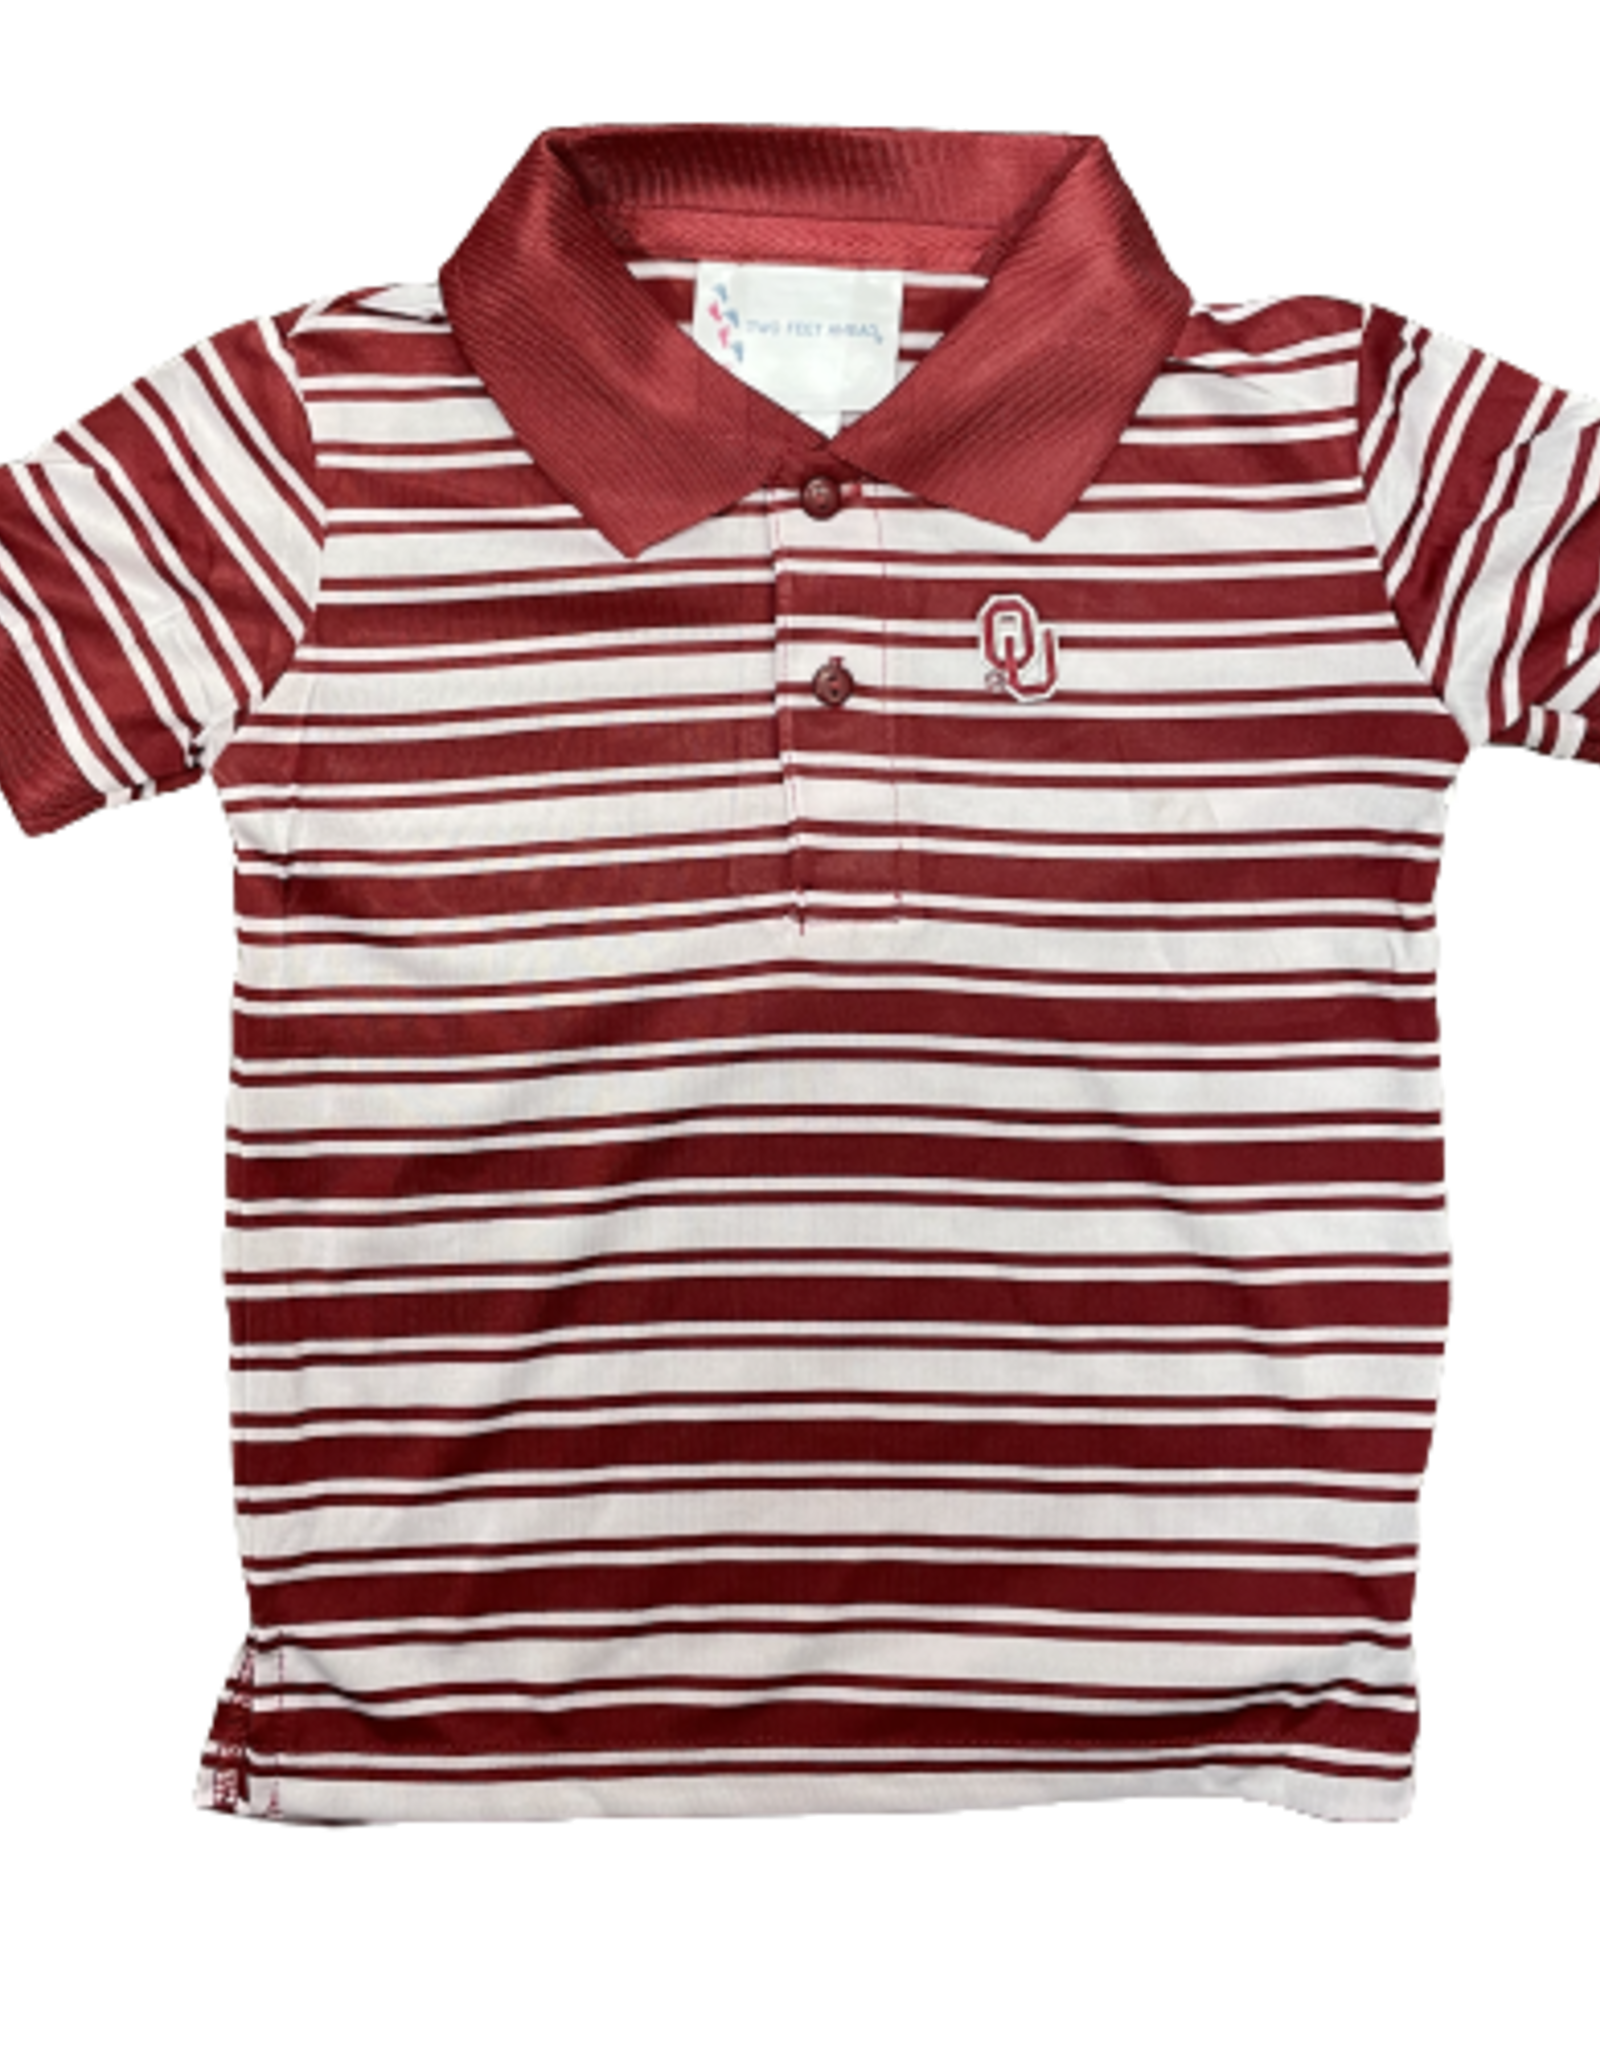 Two Feet Ahead Toddler OU Polyester Stripe Golf Shirt